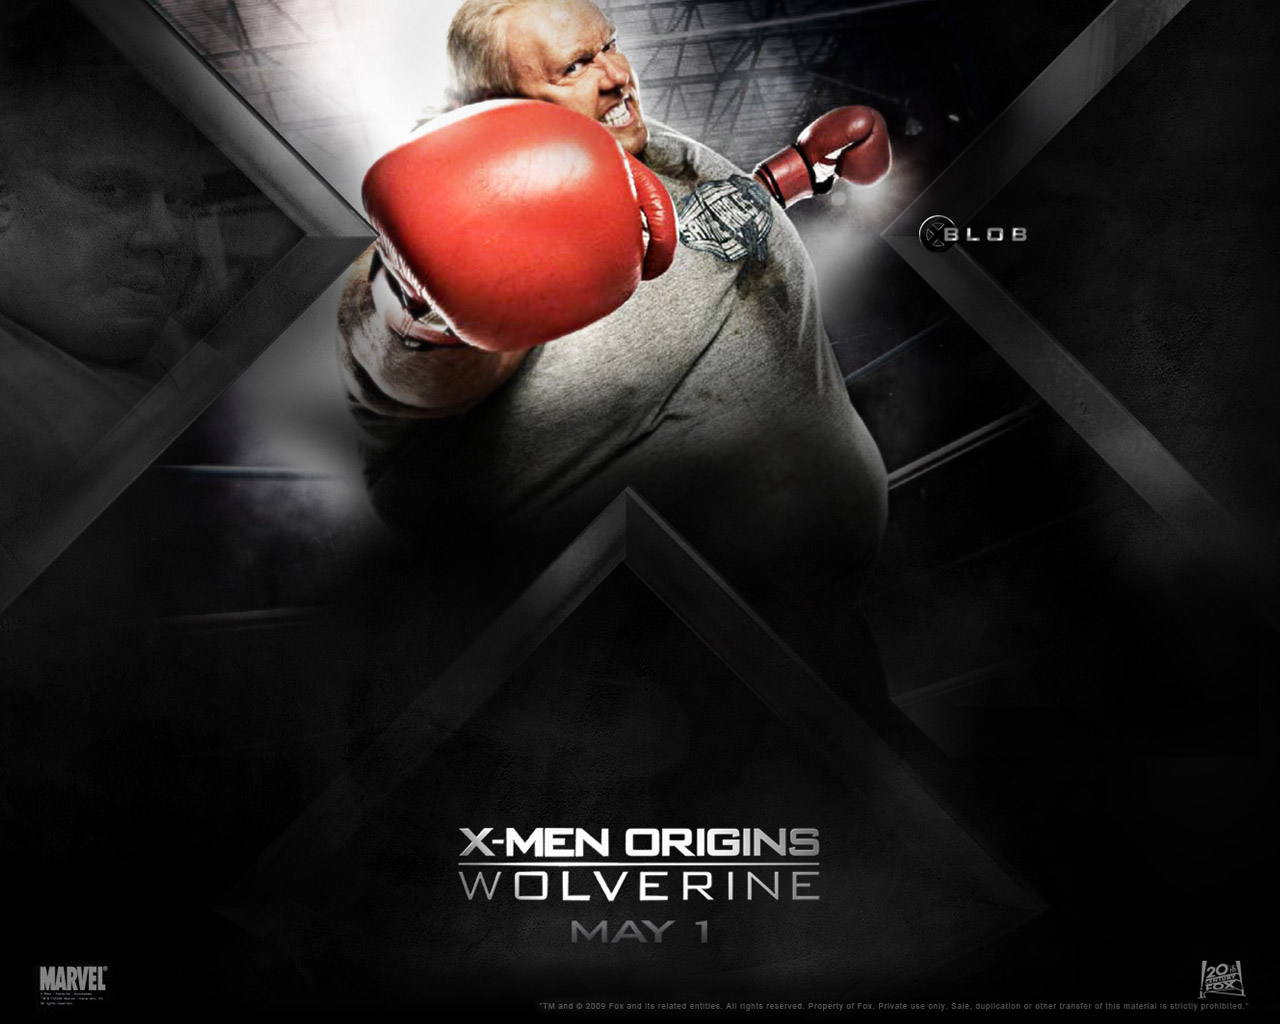 X-Men Origins: Wolverine Wallpaper - Blob